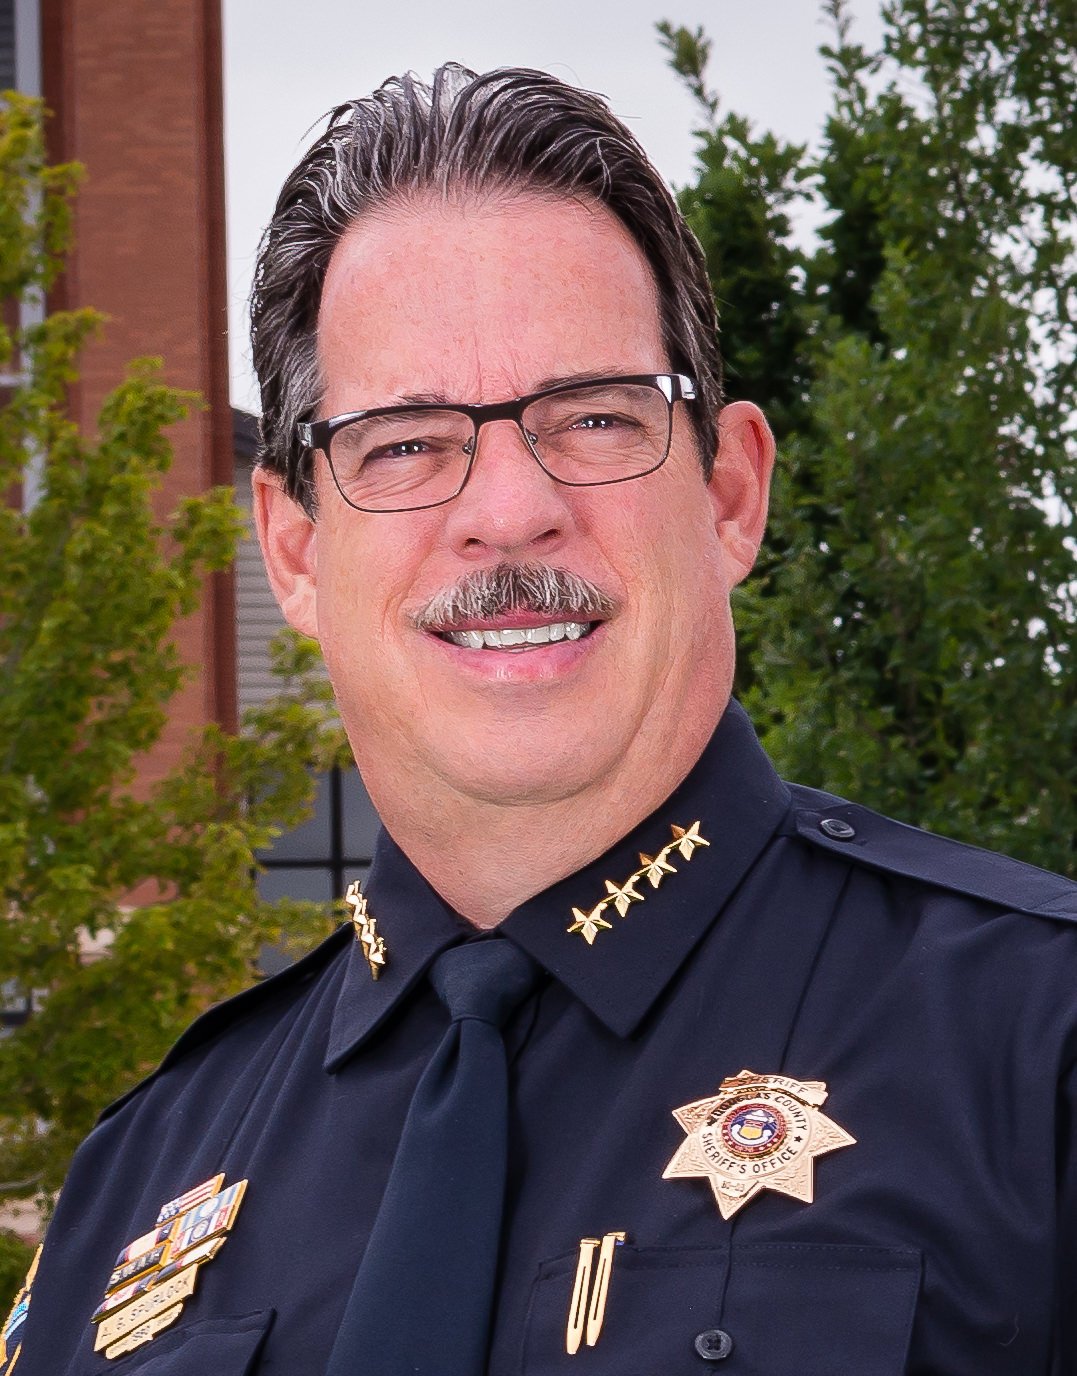 Sheriff Douglas County Government